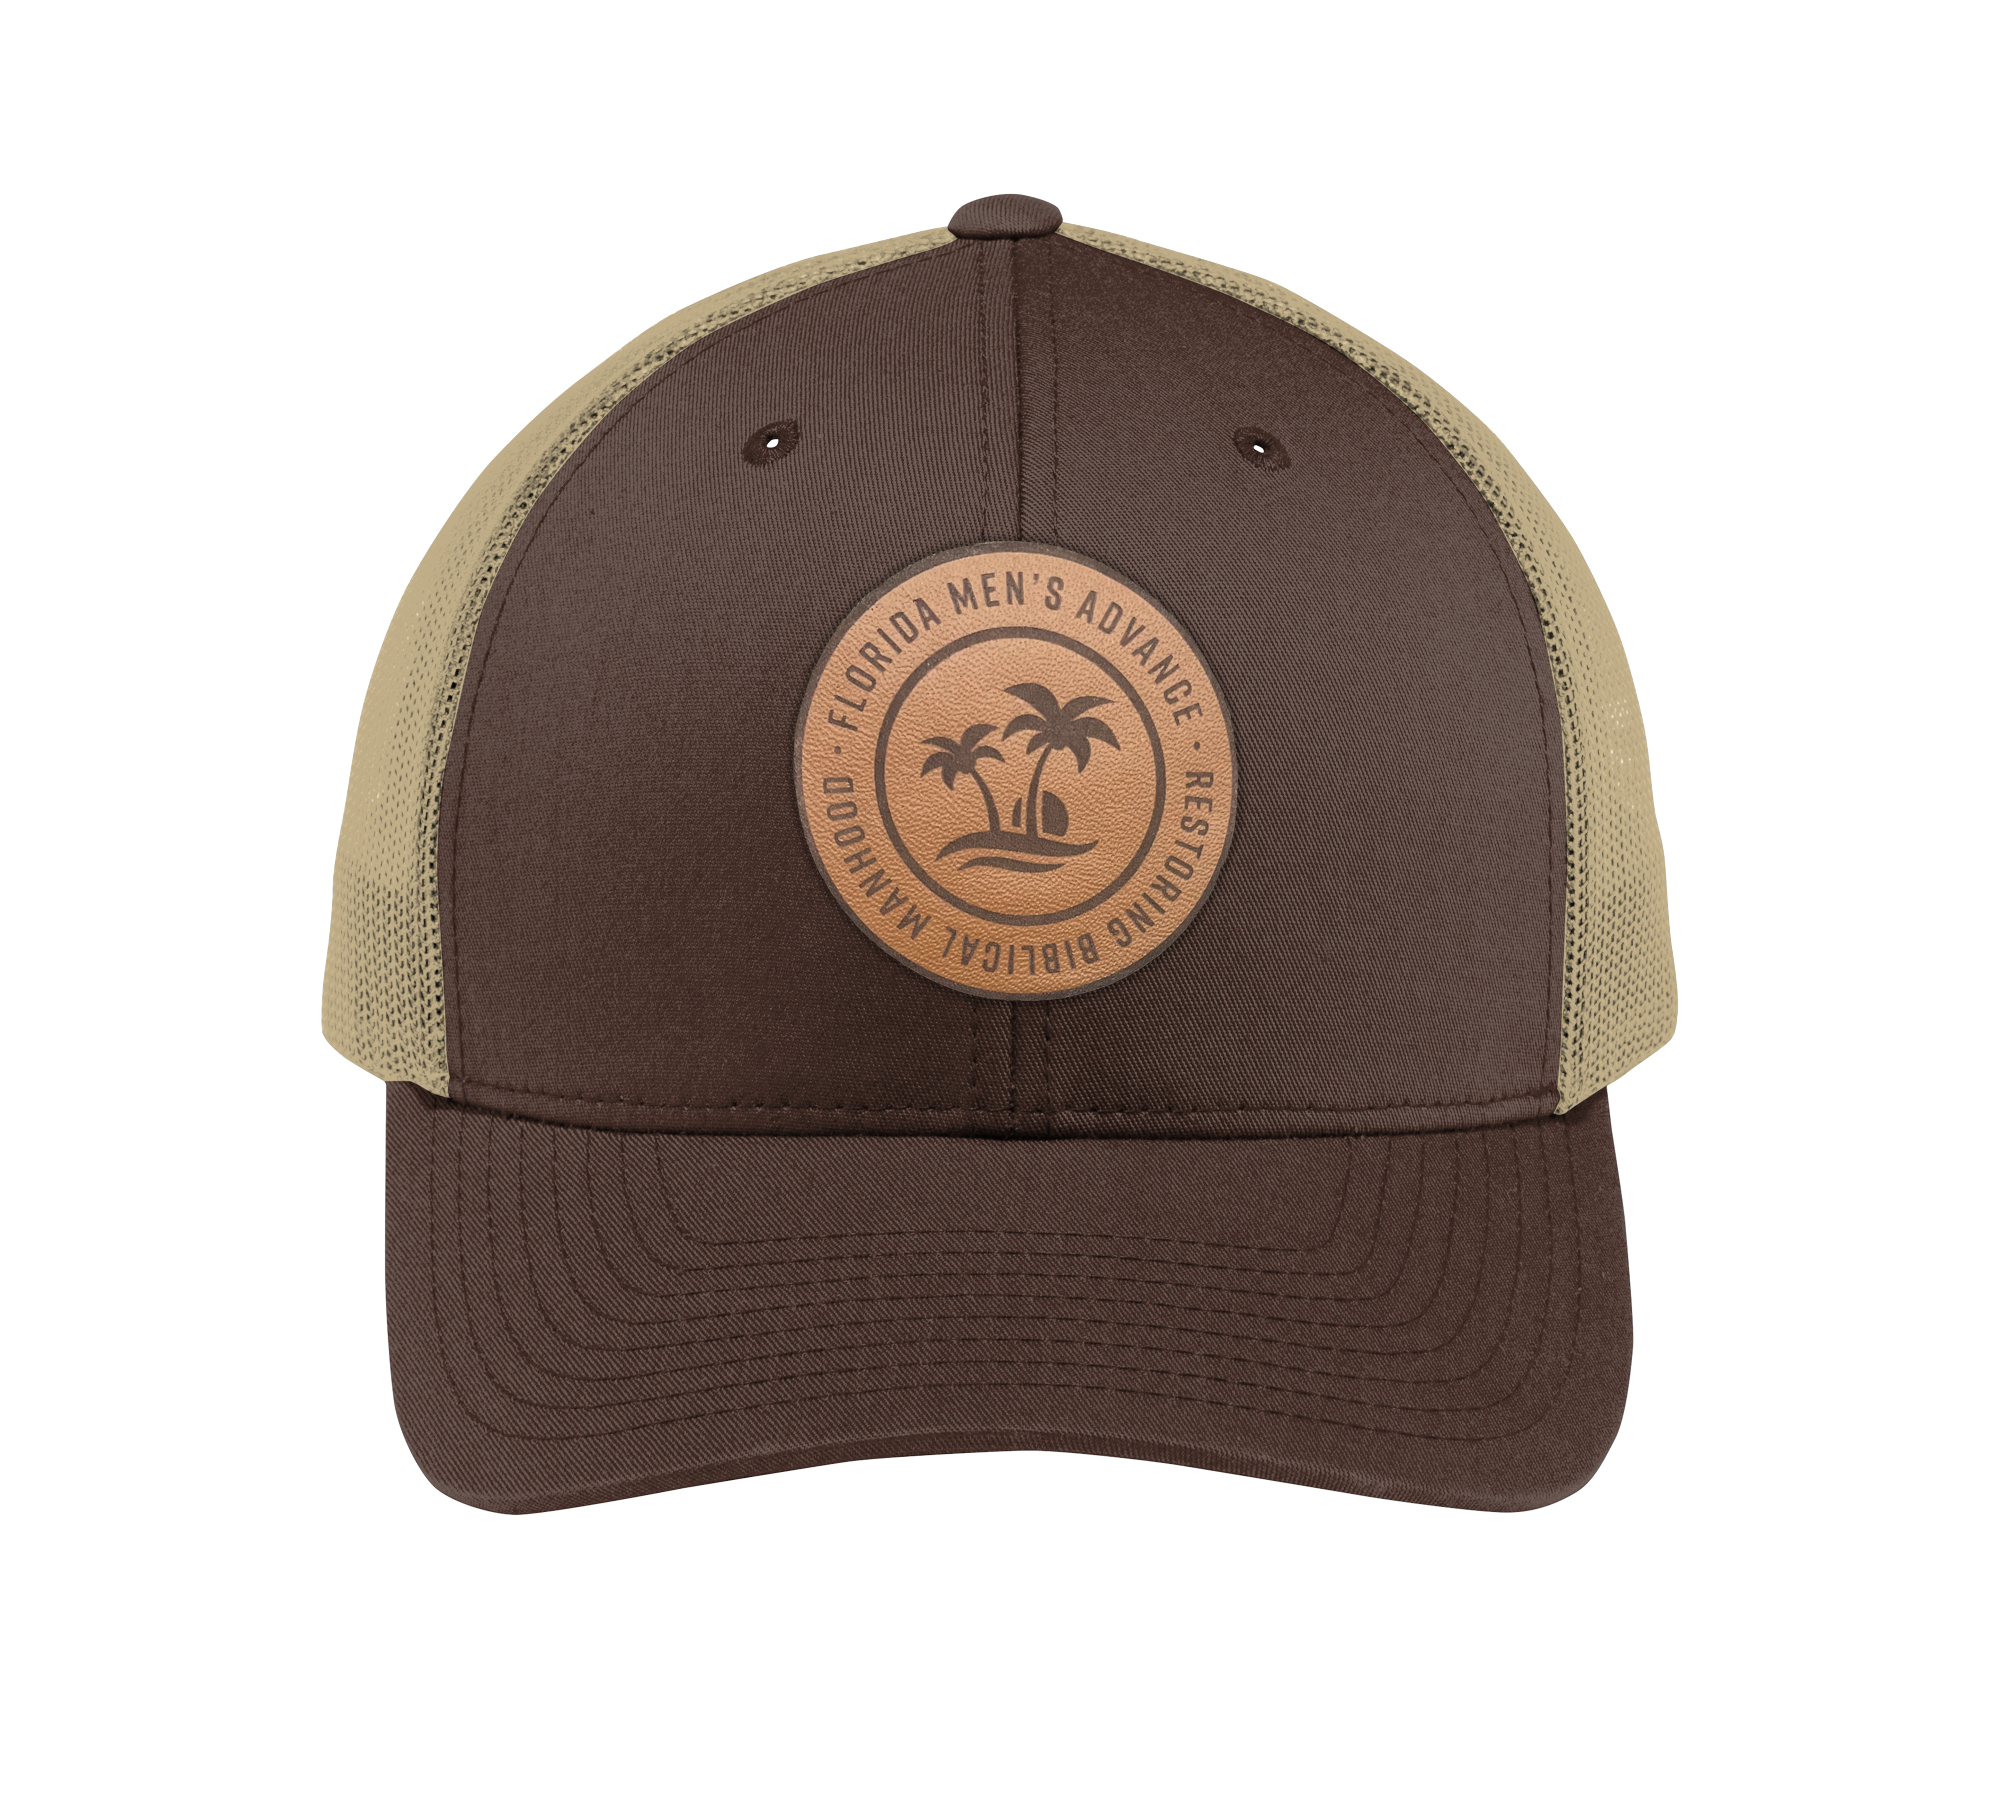 Florida Men's Advance Cafe Brown Trucker Hat